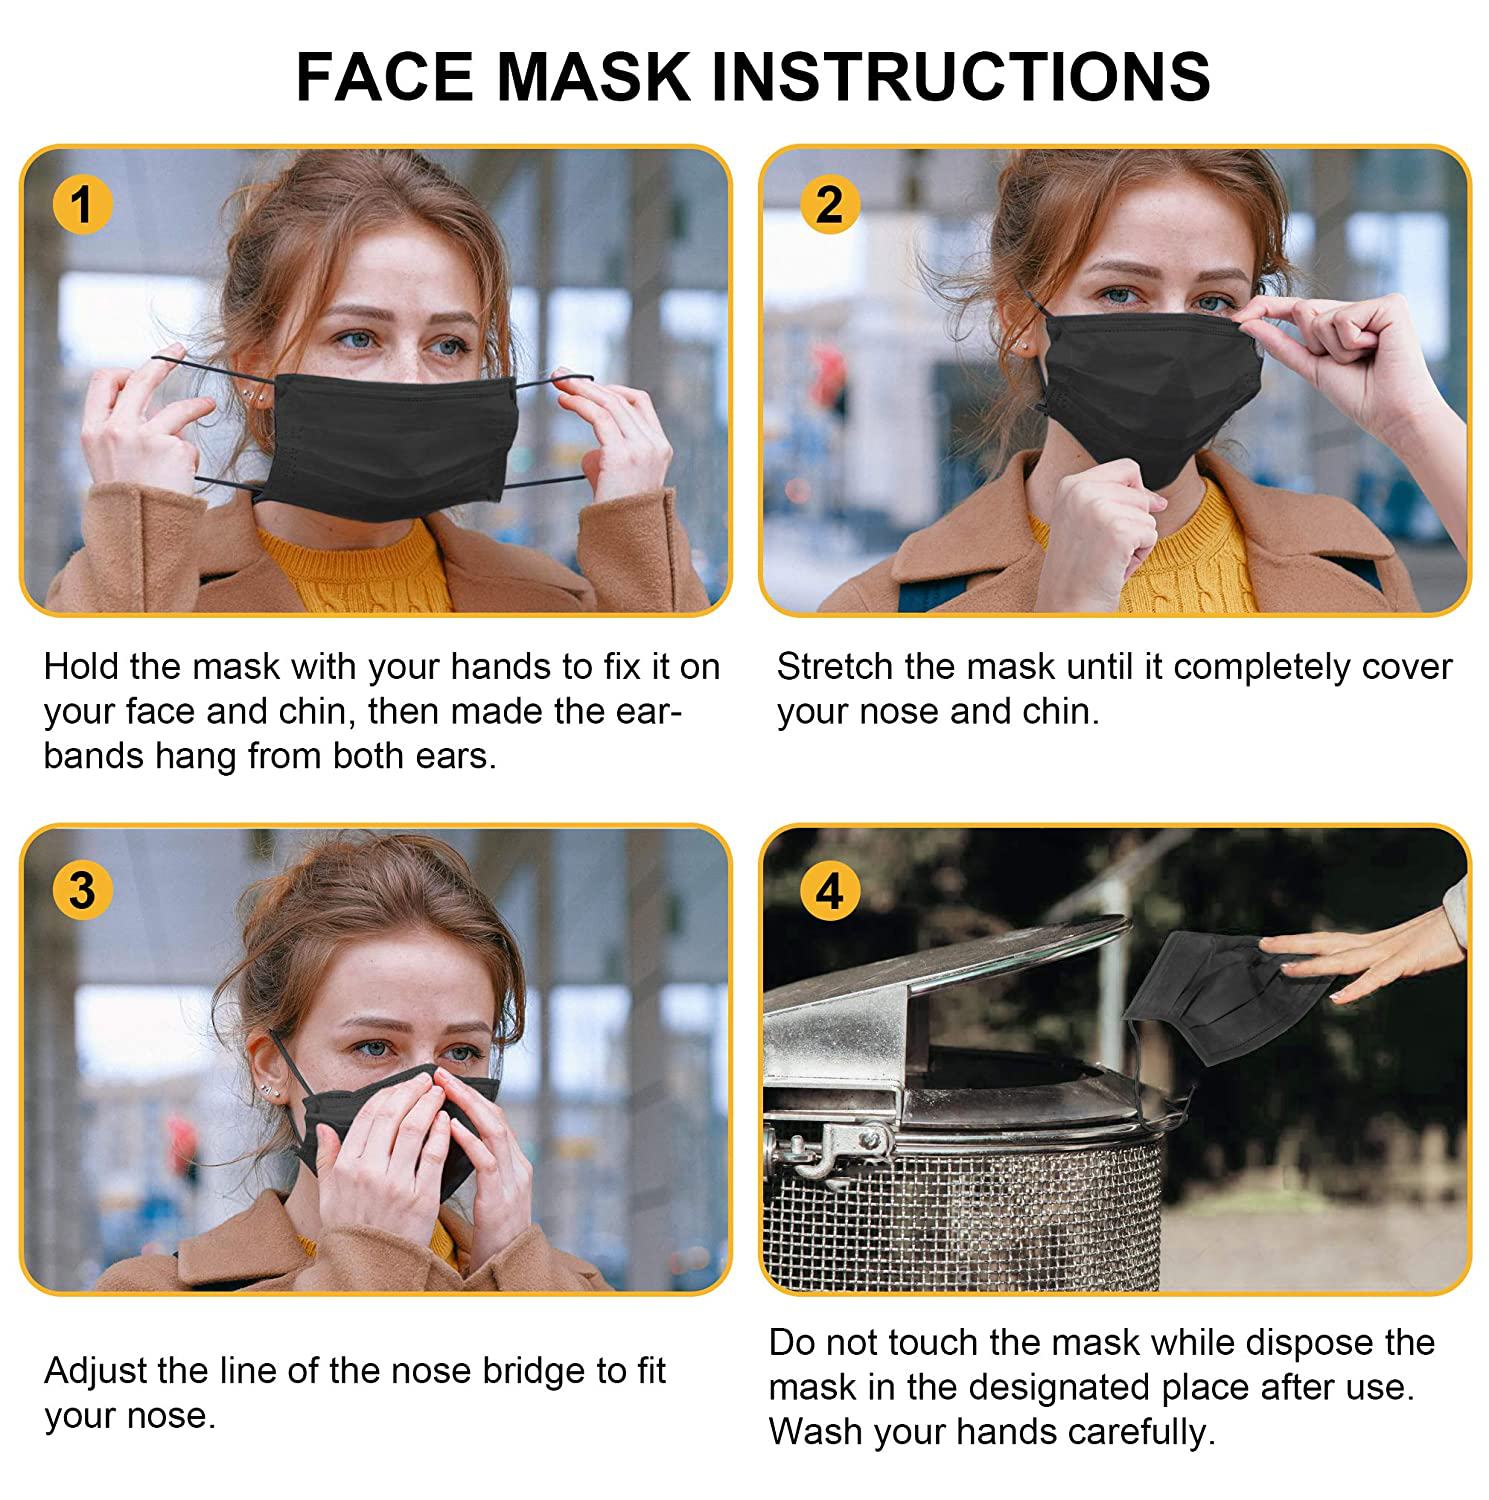 Black Disposable Face Masks,